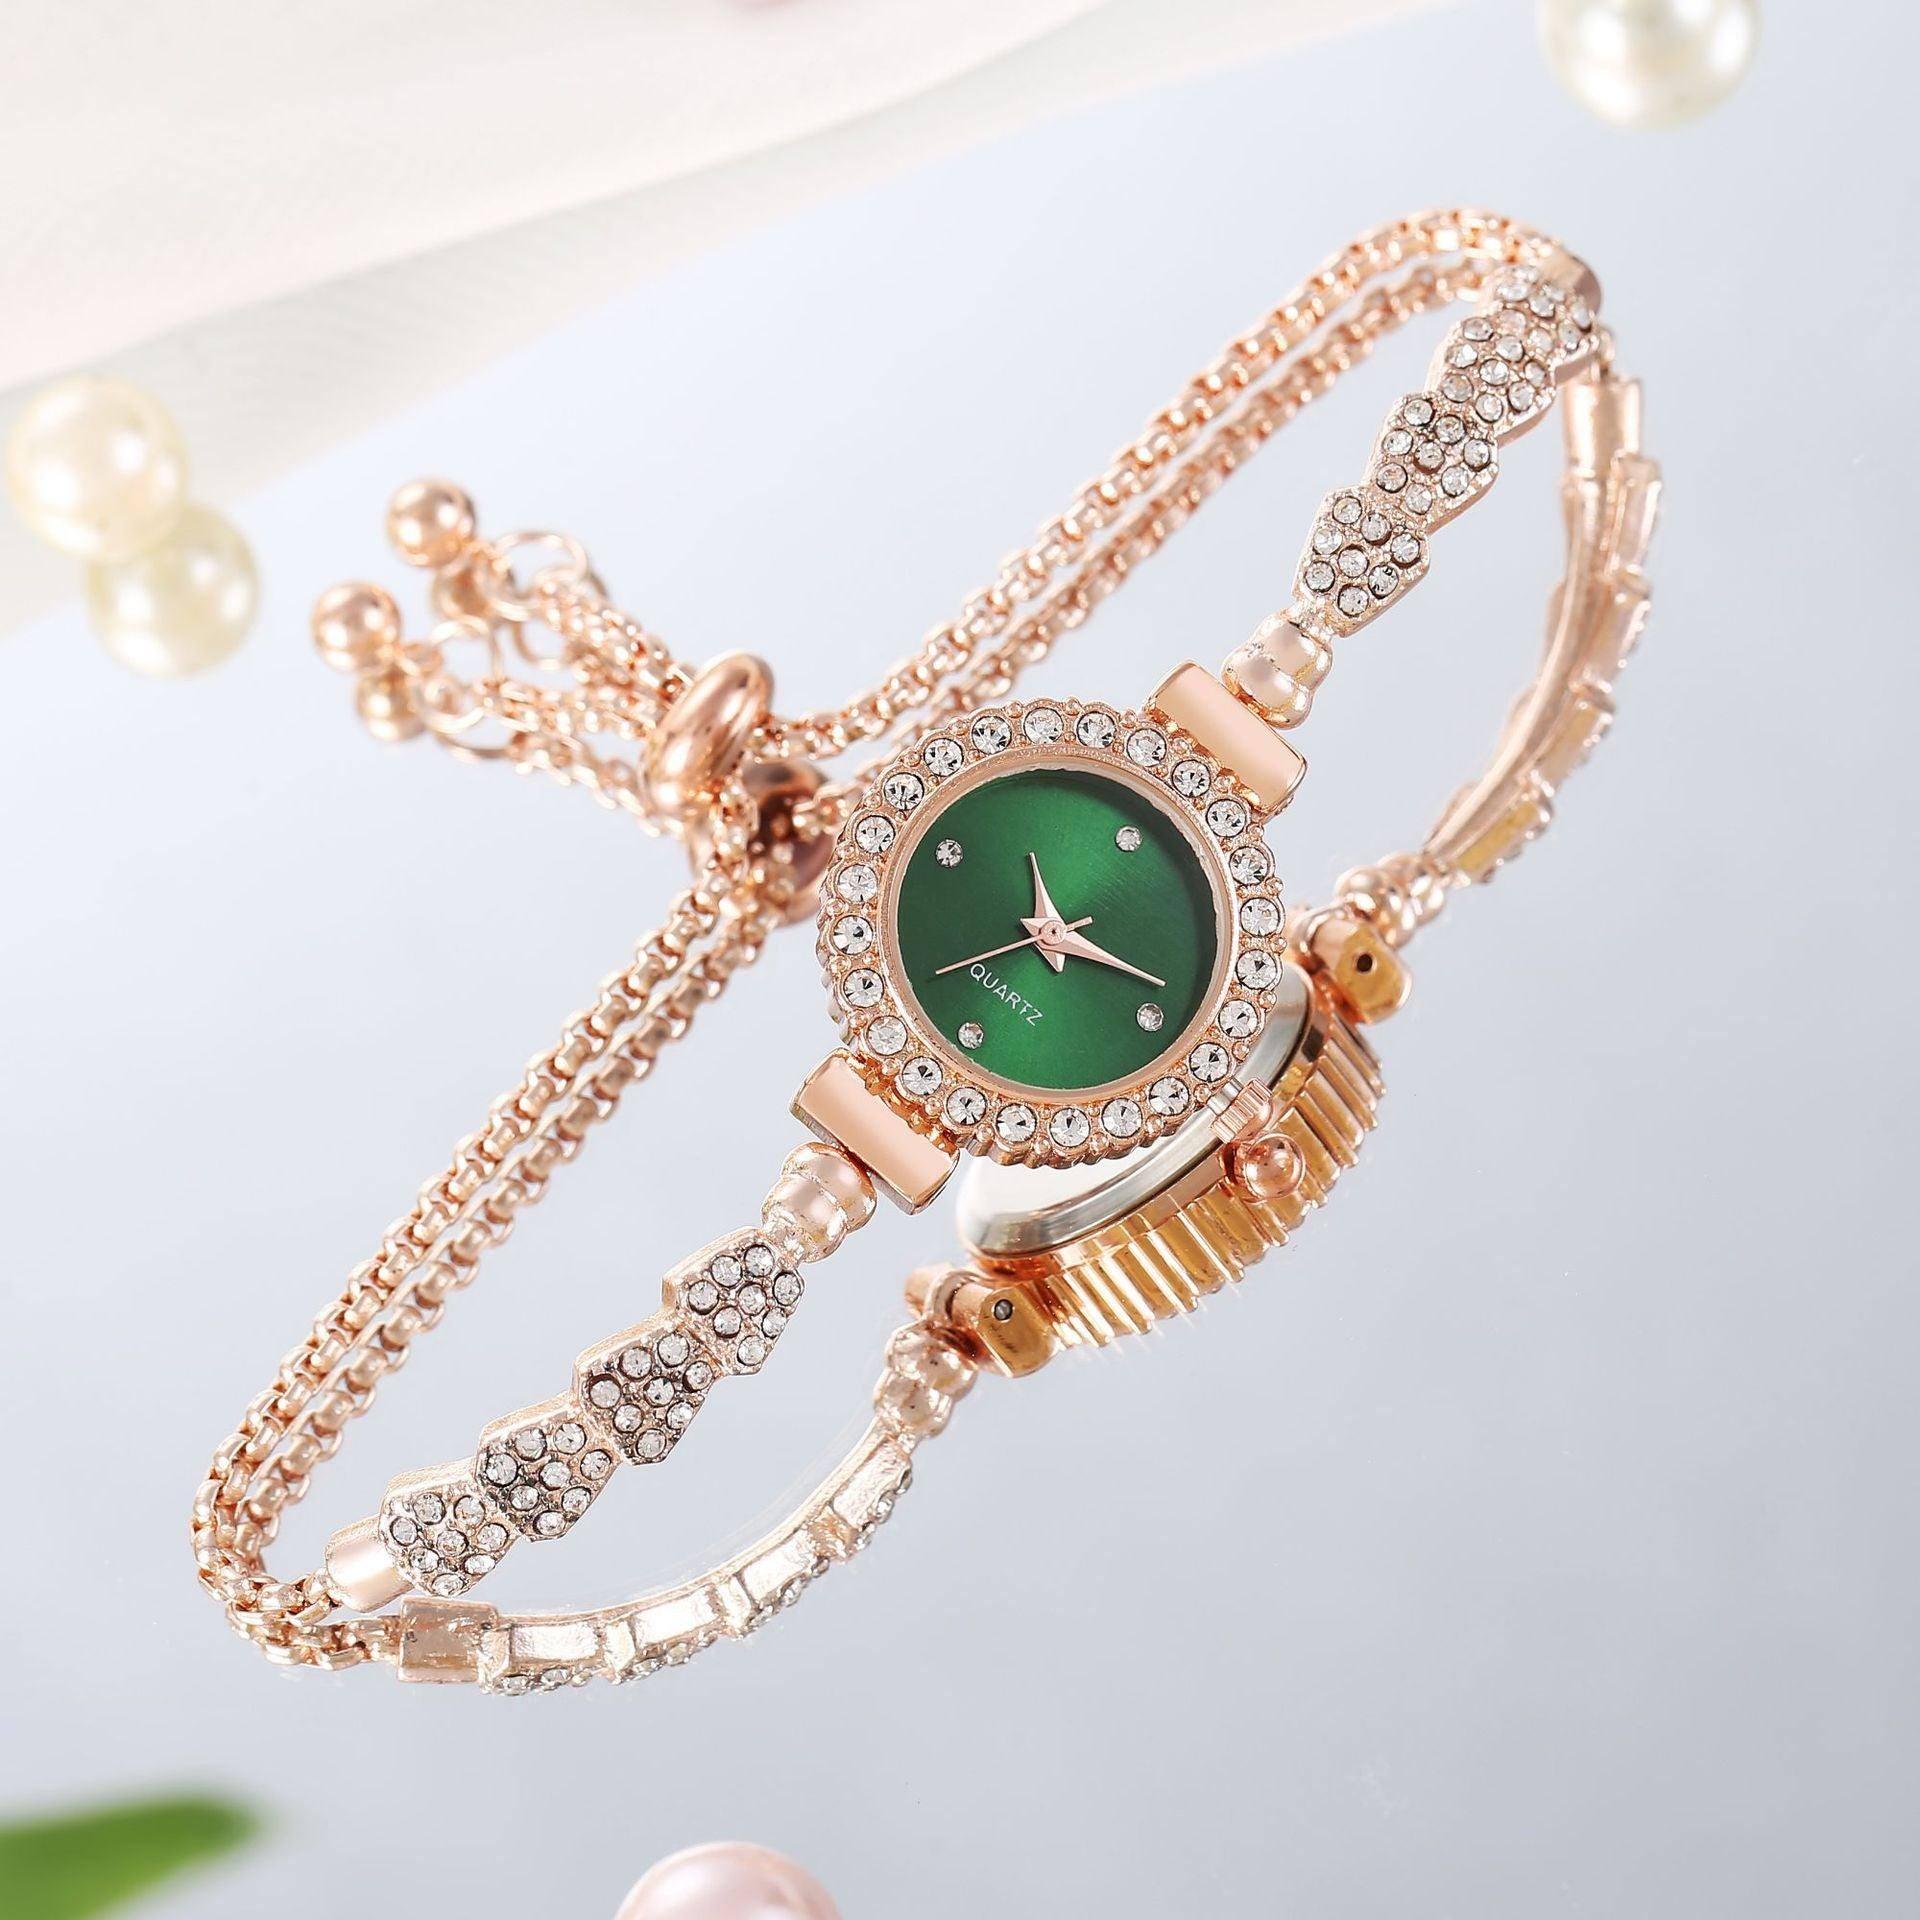 Adjustable Bracelet Watch Women's Quartz Watch-Green-6